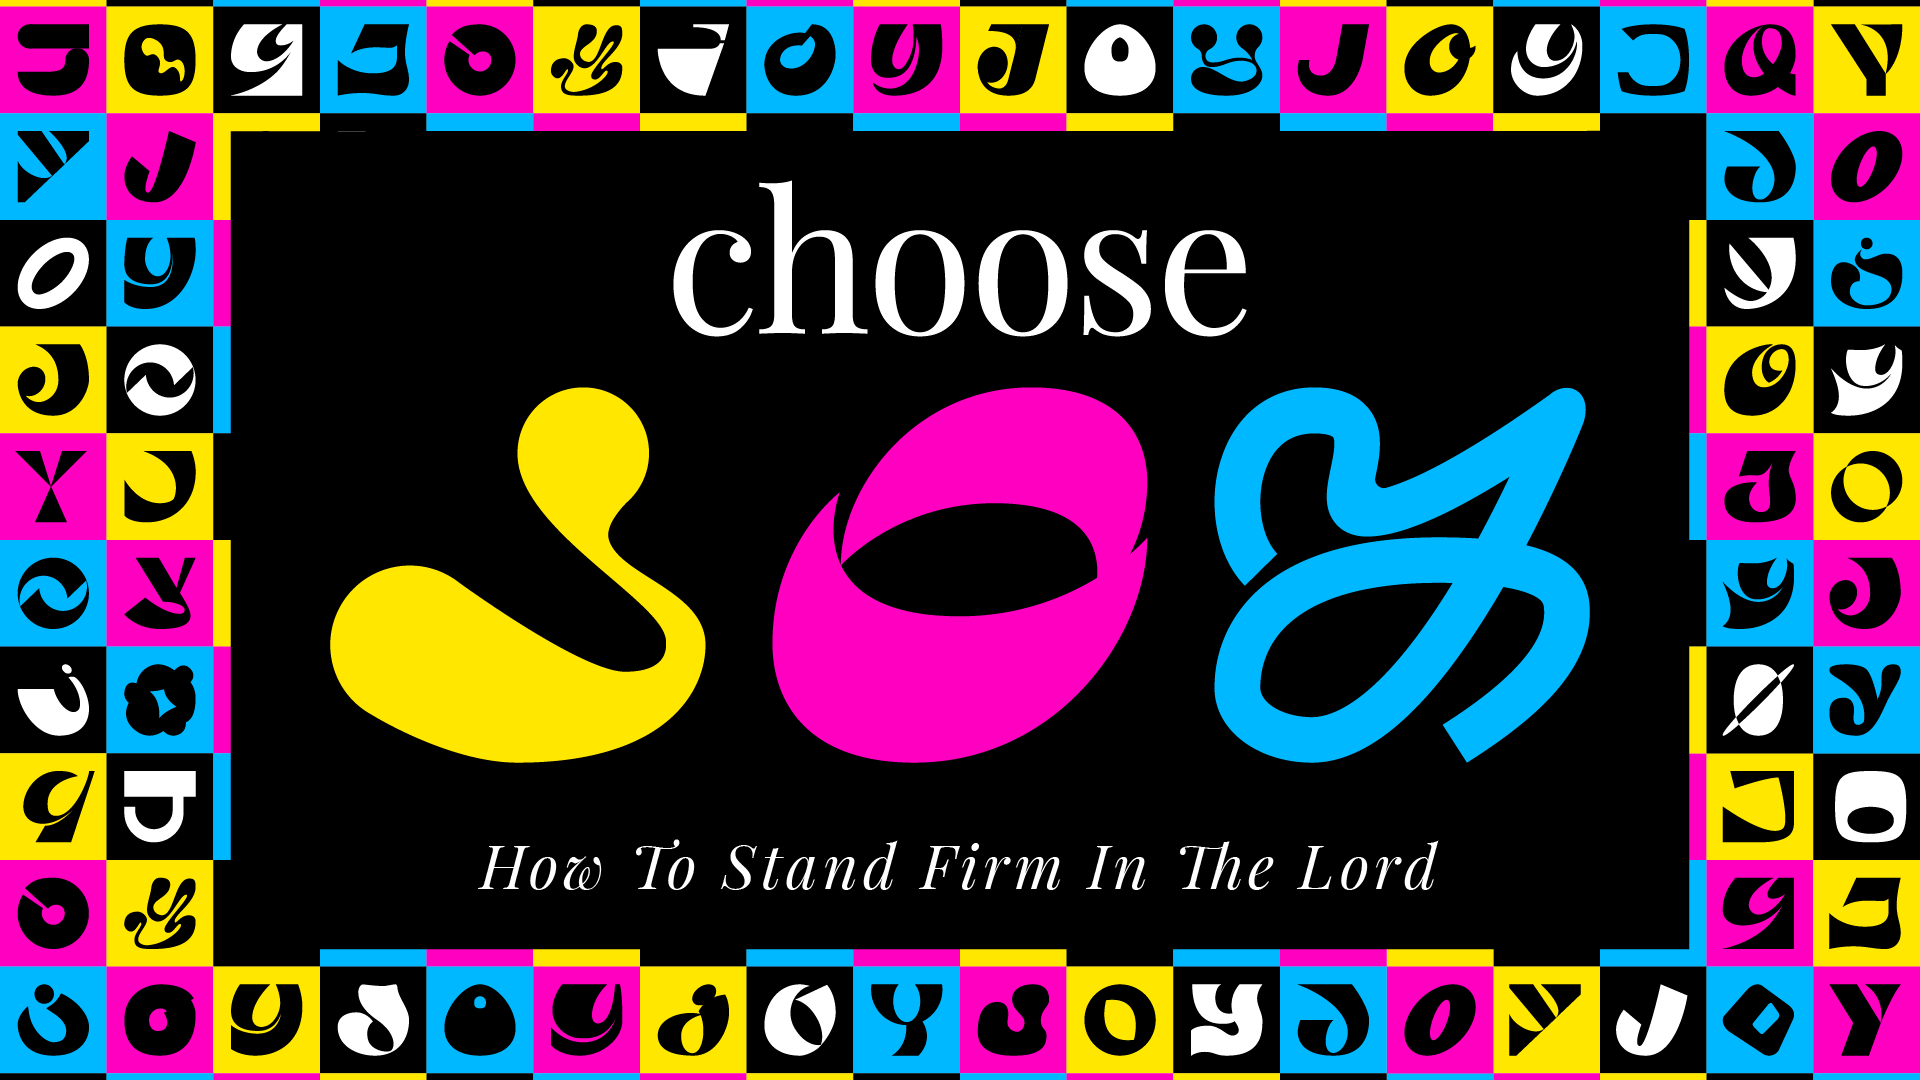 8:00 – Choose Joy: Stand Firm